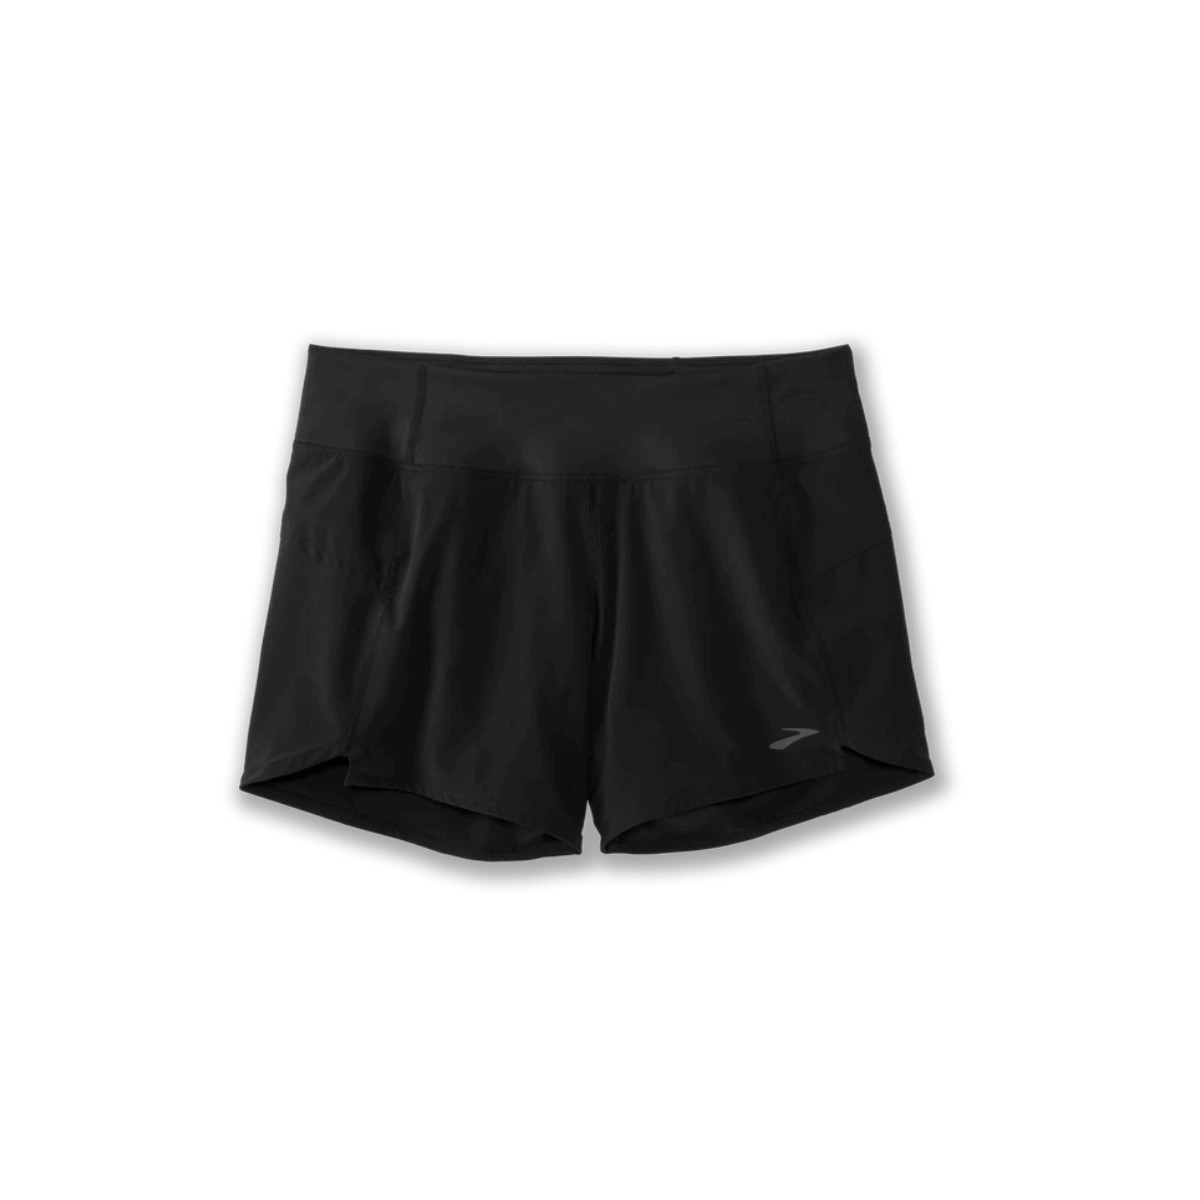 Brooks Chaser 5 Shorts Black Women, Size S